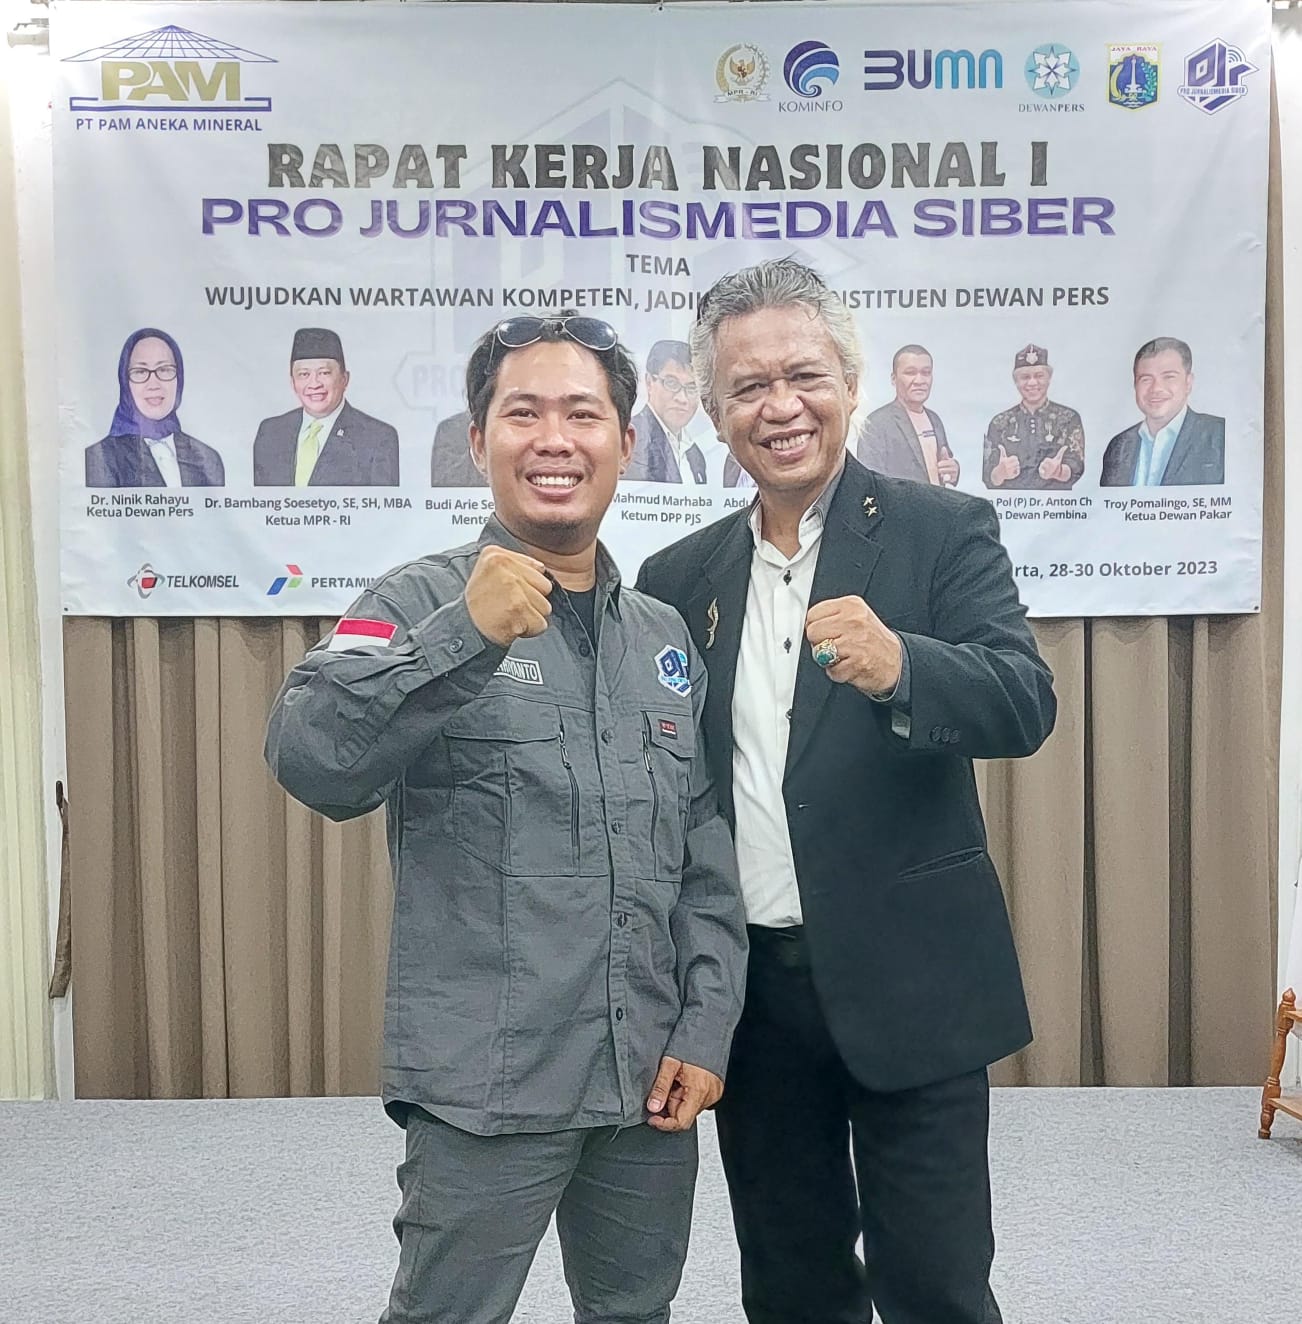 Mas Andre Hariyanto bersama Irjen Pol. Dr. Drs. H. Anton Charliyan M.P.K.N, - Mantan Kepala Divisi Humas Polri, - Kepala Kepolisian Daerah Jawa Barat, Mulai menjabat 12 Desember 2016.